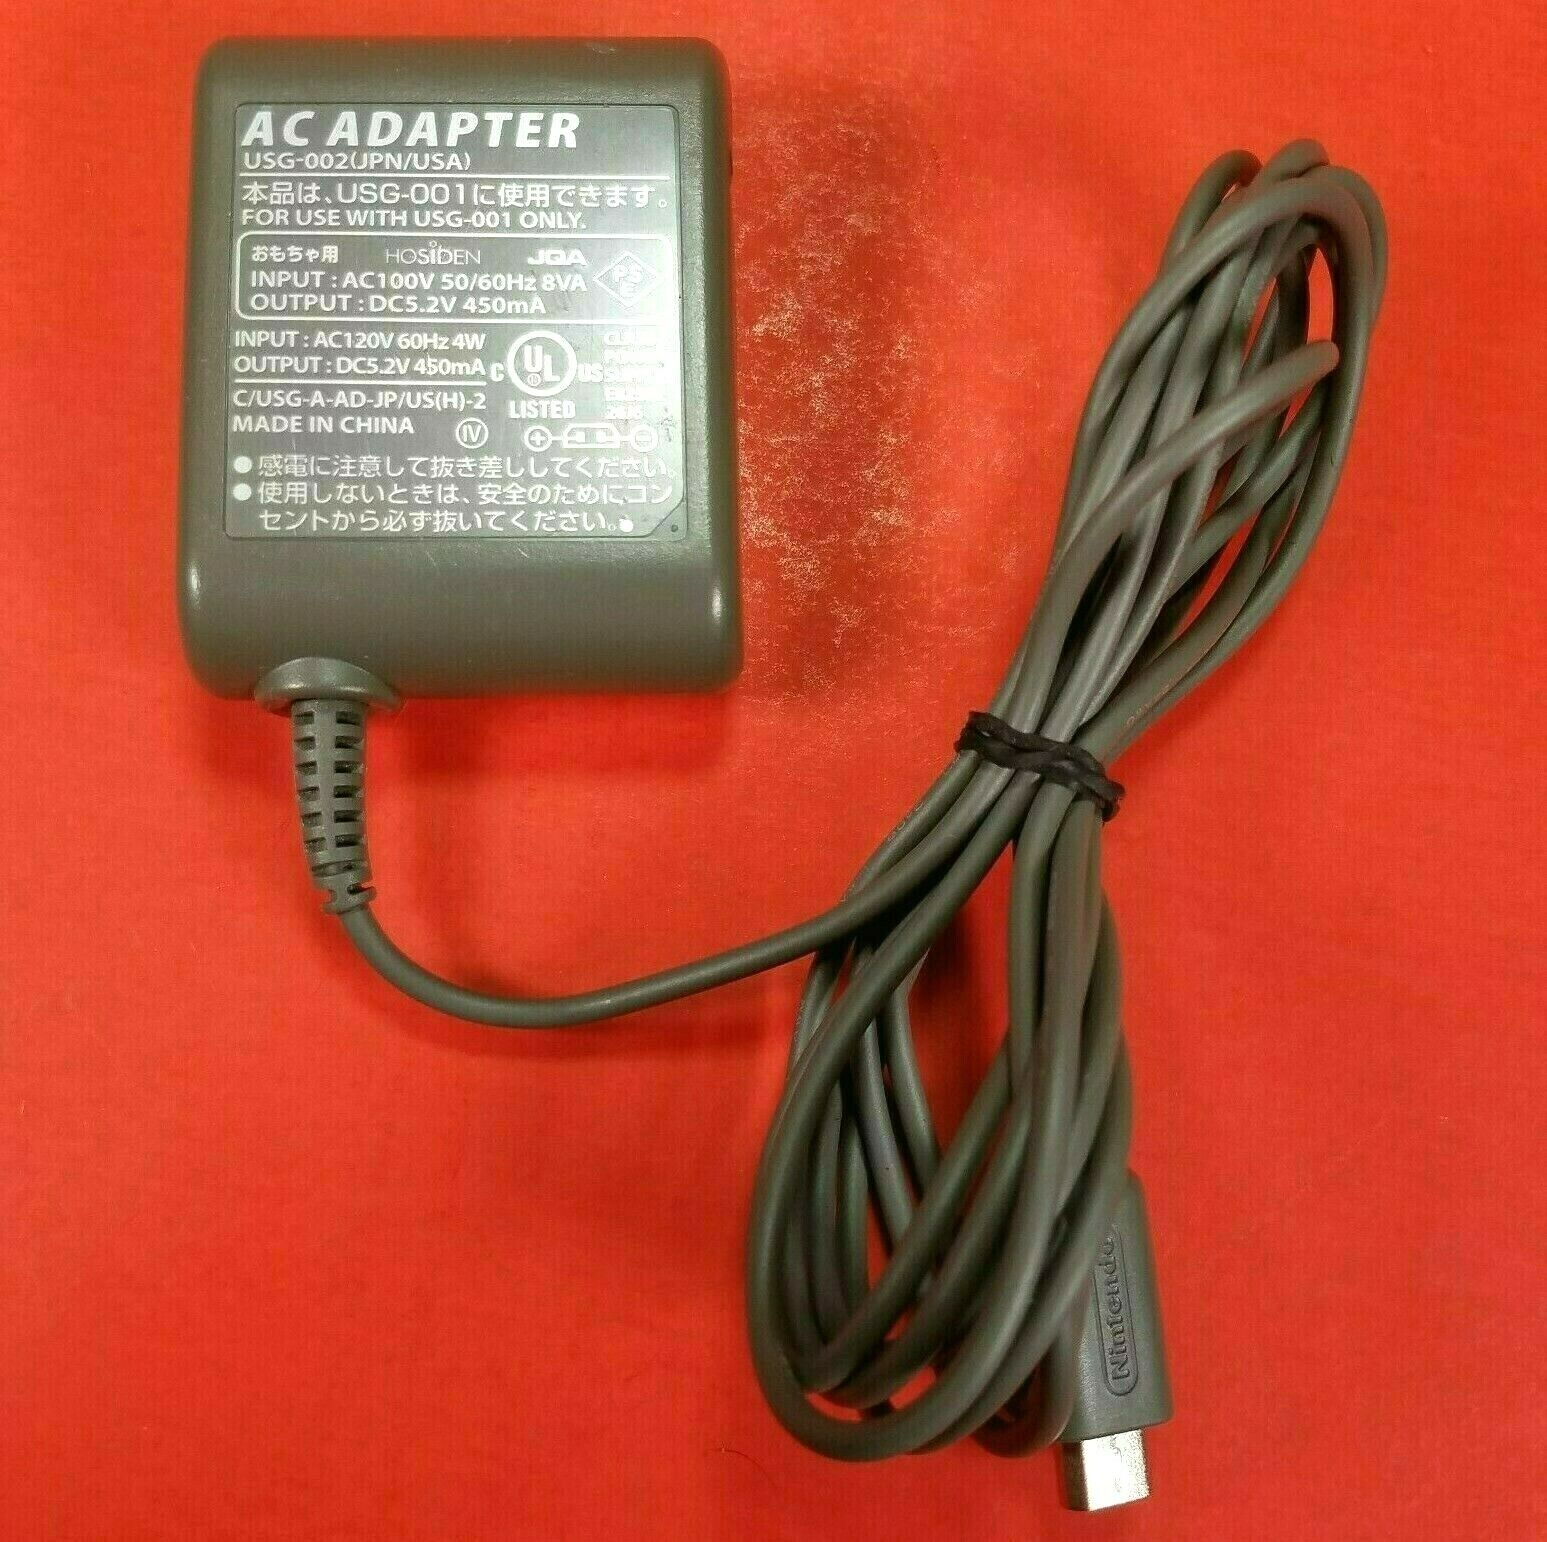 Nintendo USG-002 Power Supply Adaptor 5.2V - 450mA OEM AC/DC Adapter for USG-001 Type: AC Adapter